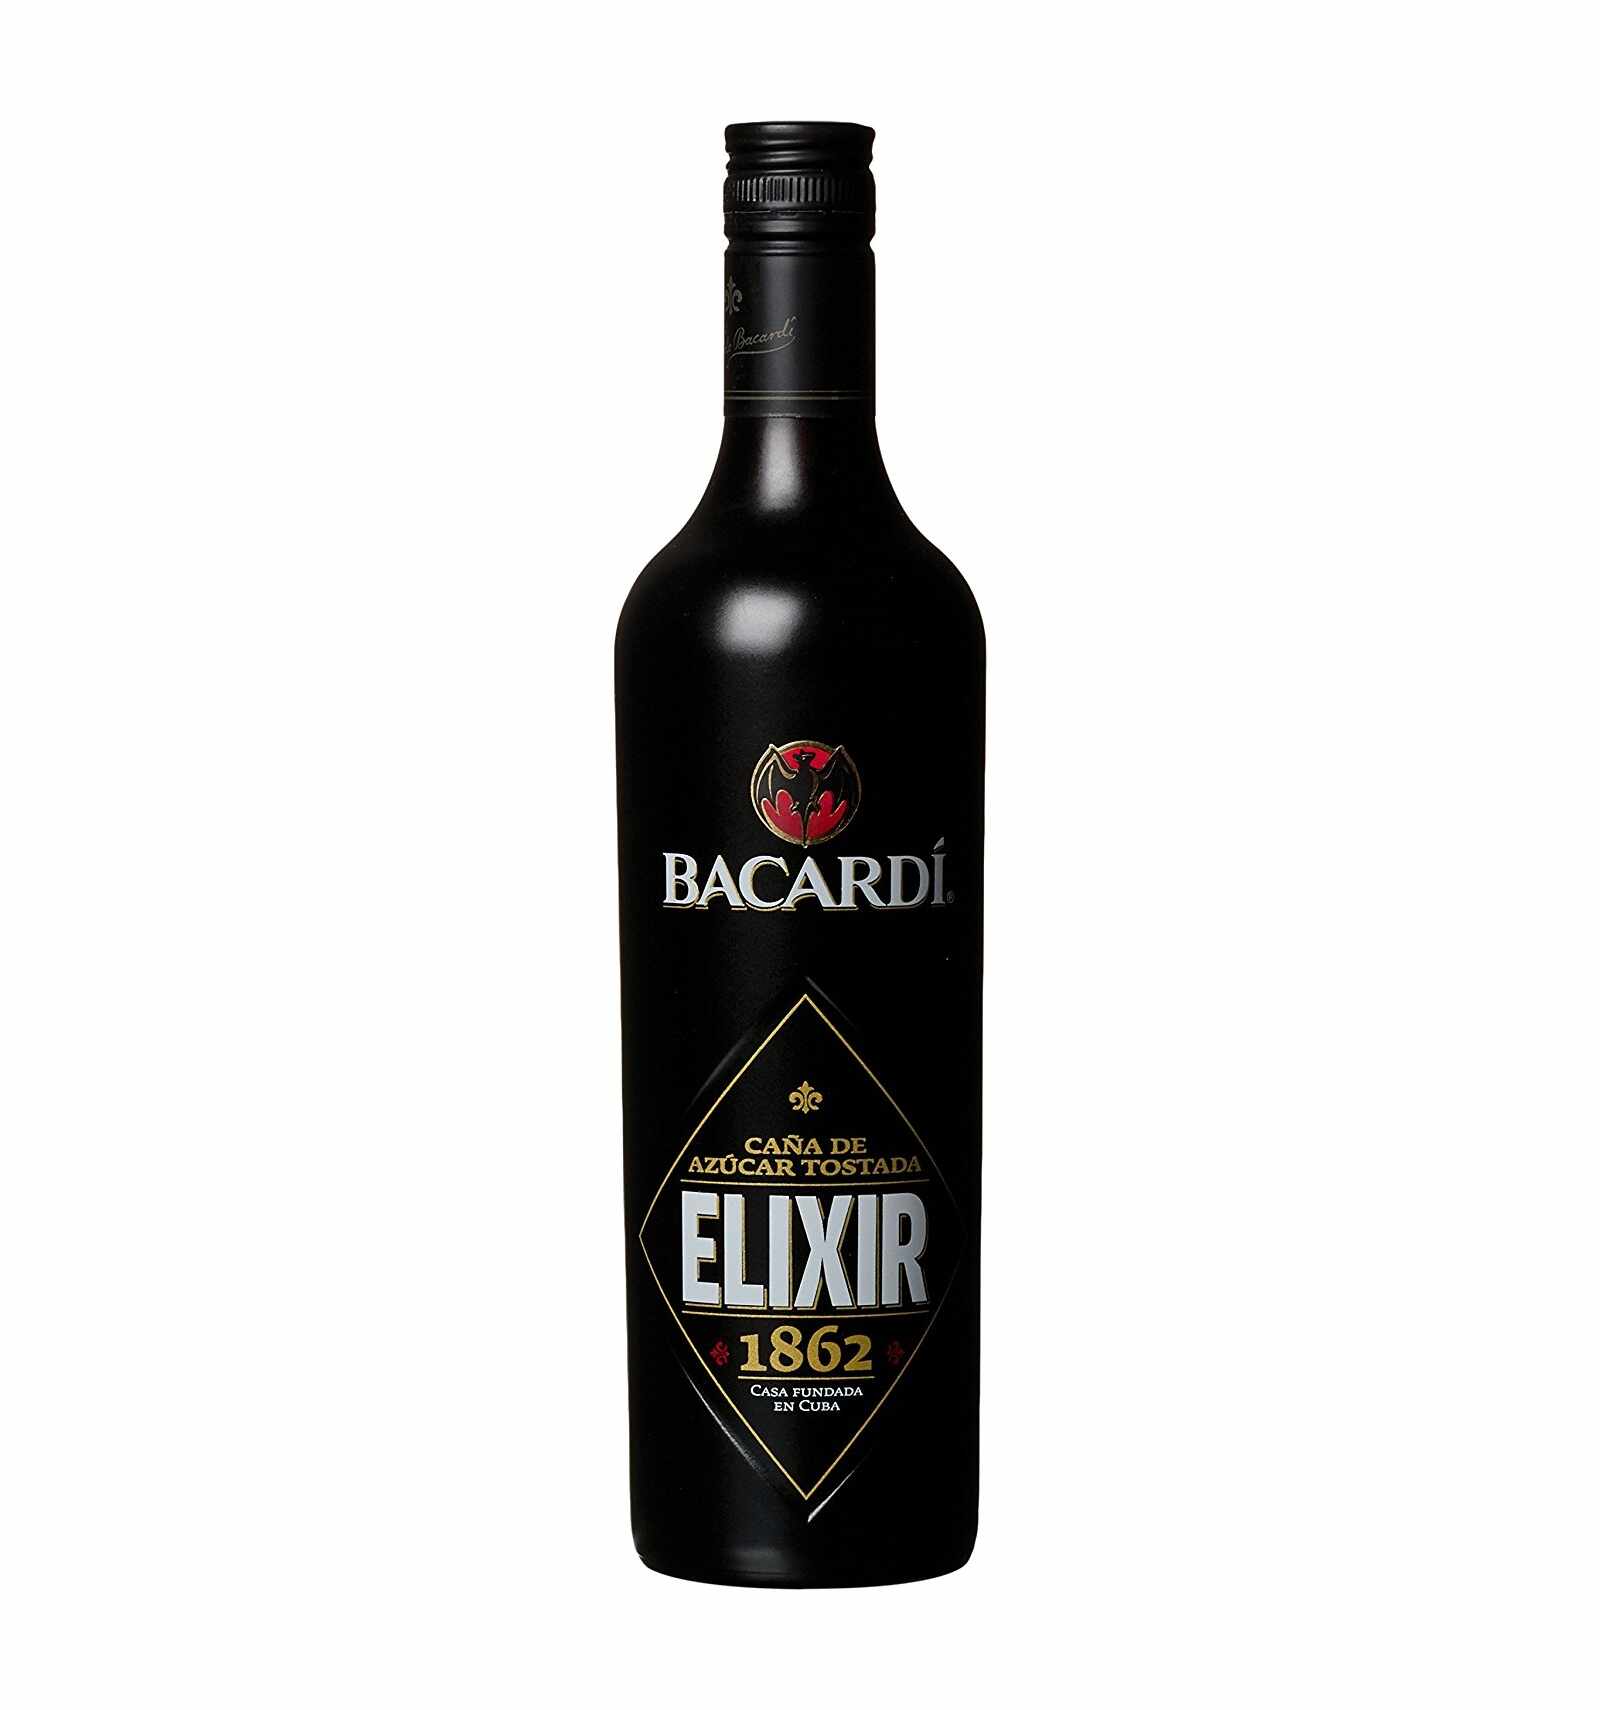 Rom Bacardi Elixir, 20% alc., 0.7L, Cuba